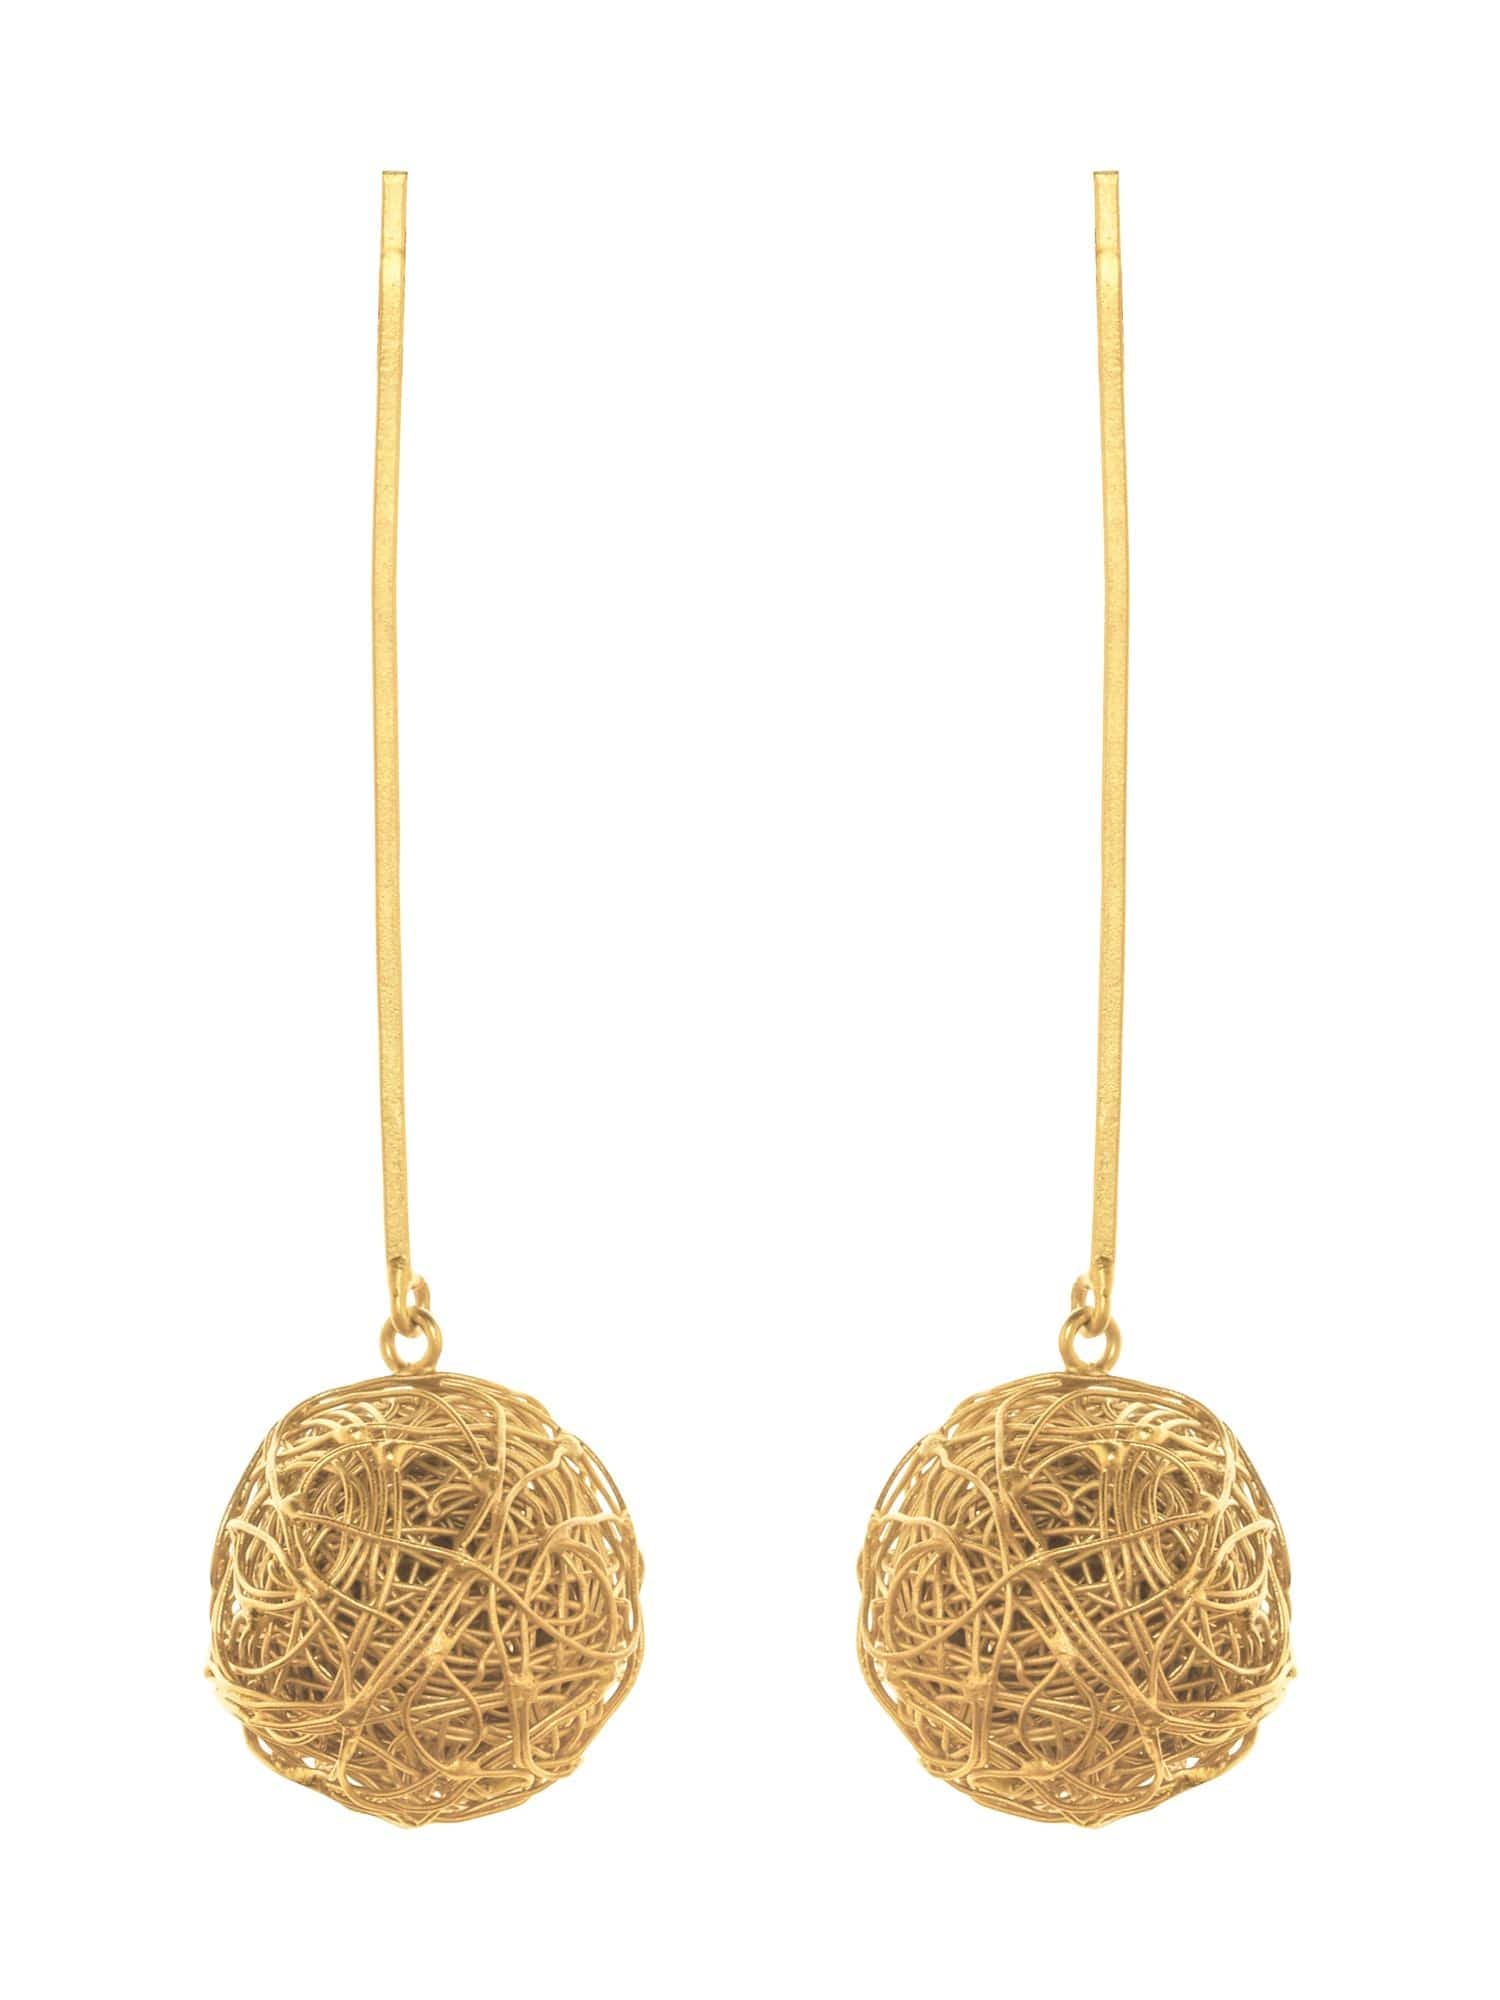 Handcrafted bauble earrings